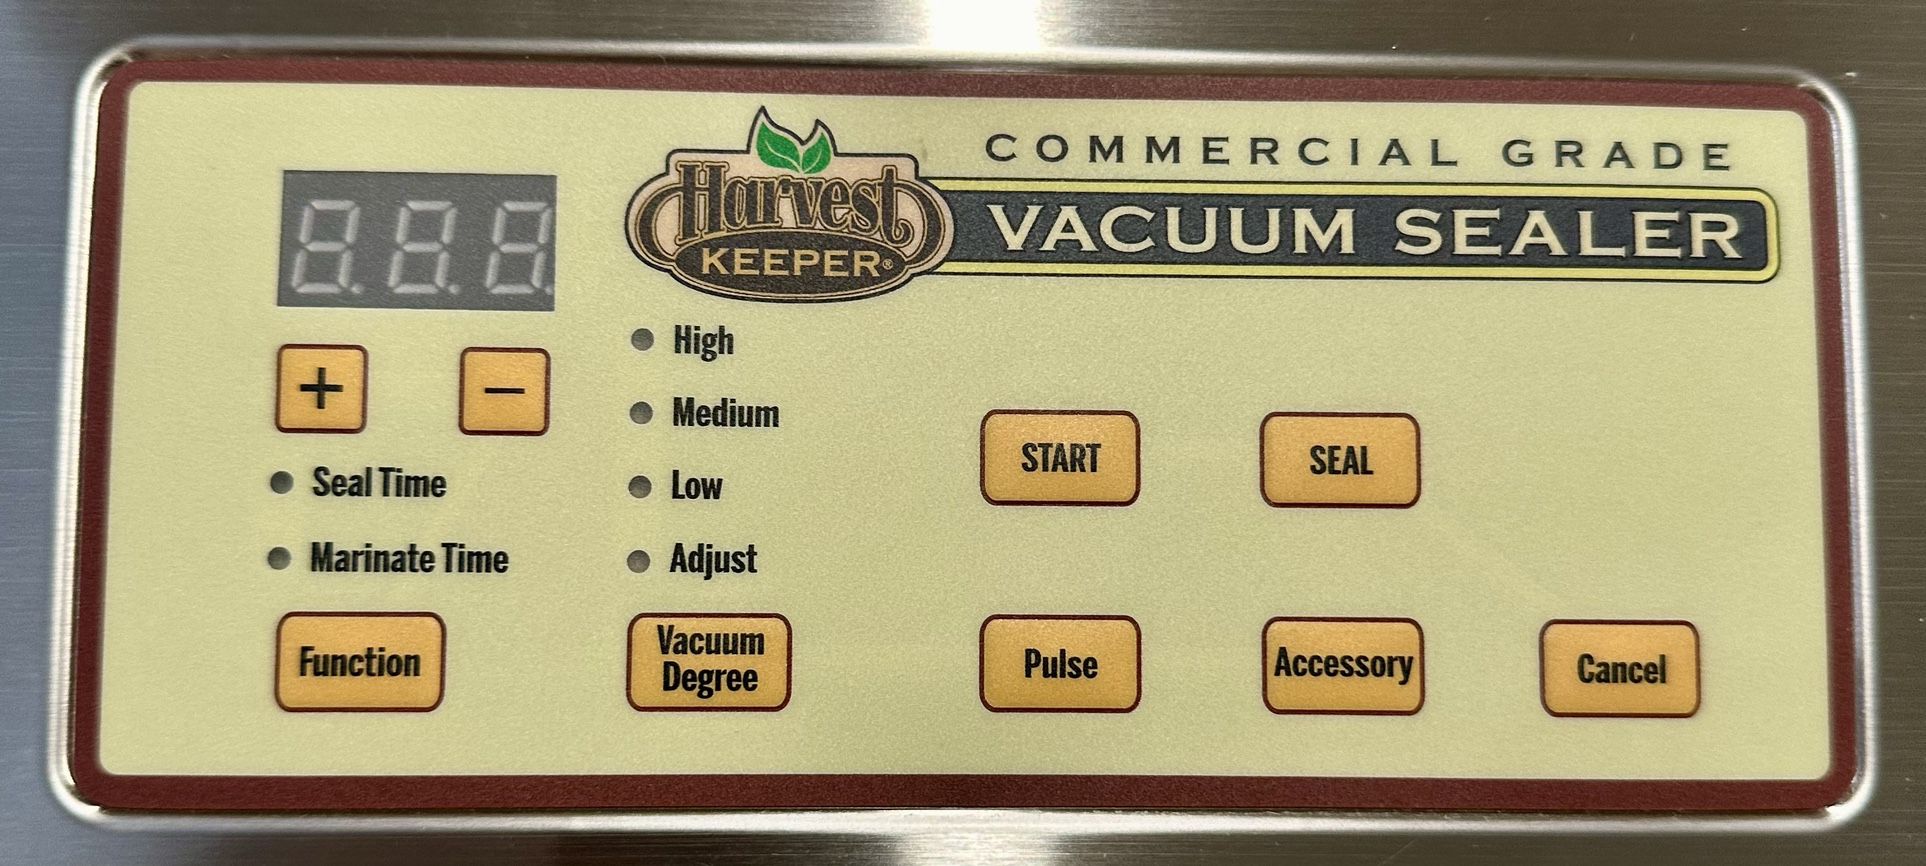 Sold at Auction: Harvest Keeper Commercial Grade Vacuum Sealer